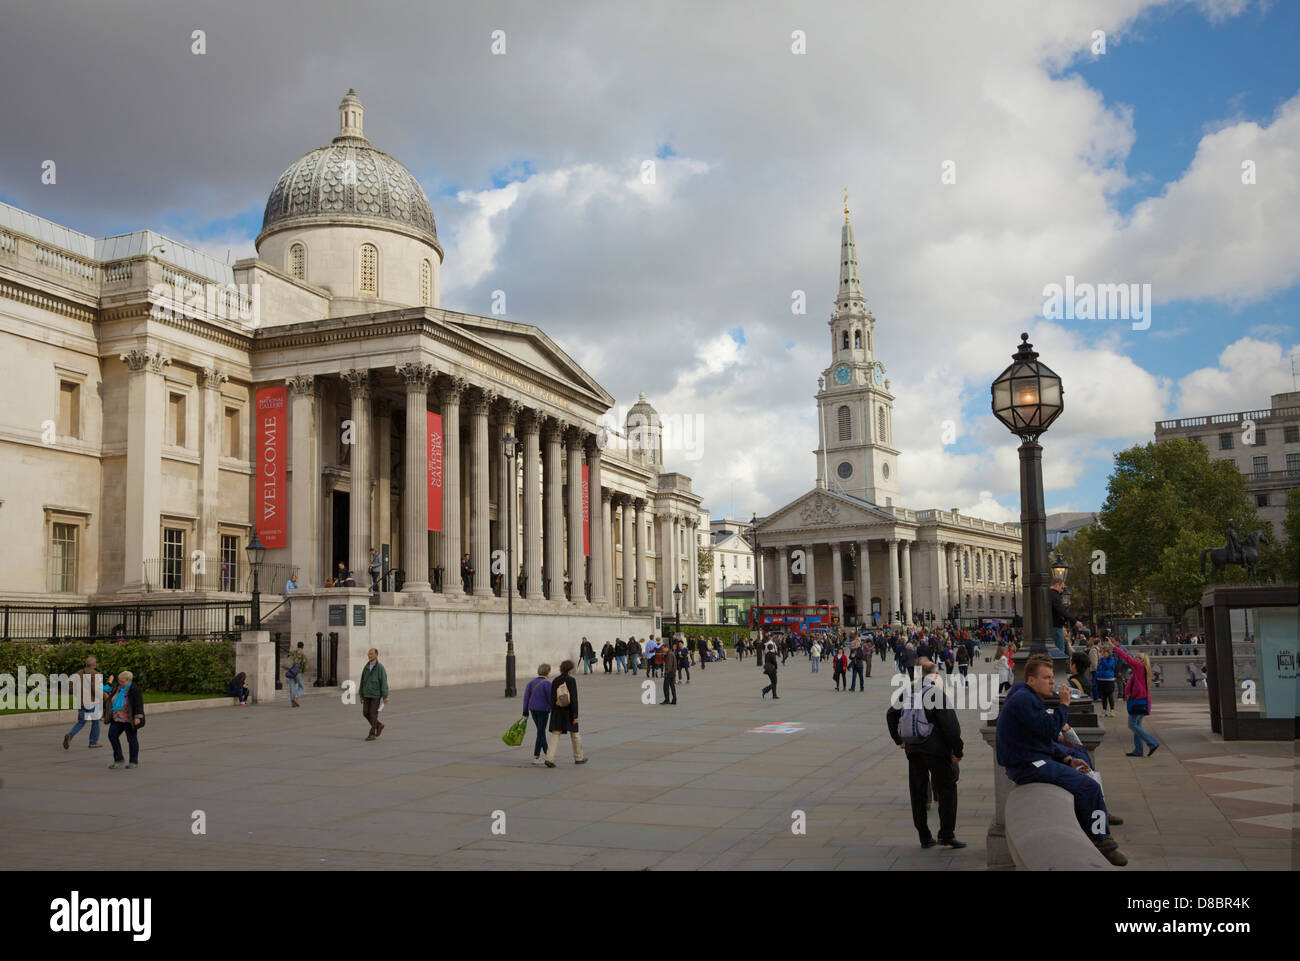 A busy scene of Trafalgar square, London, UK. Stock Photo